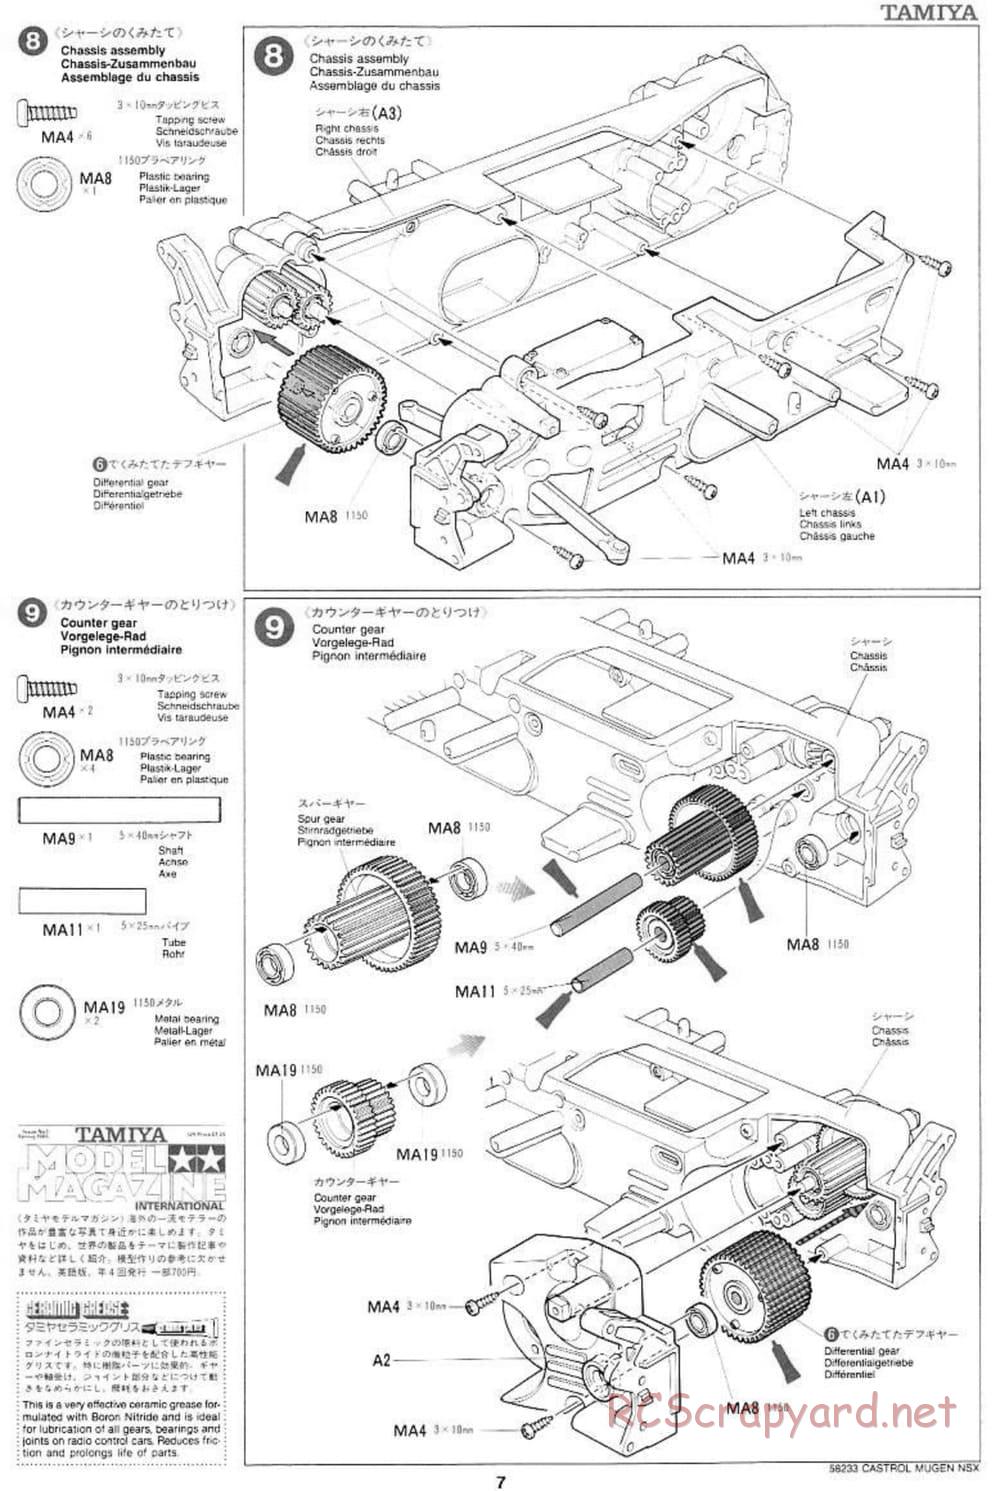 Tamiya - Castrol Mugen NSX - TL-01 Chassis - Manual - Page 7